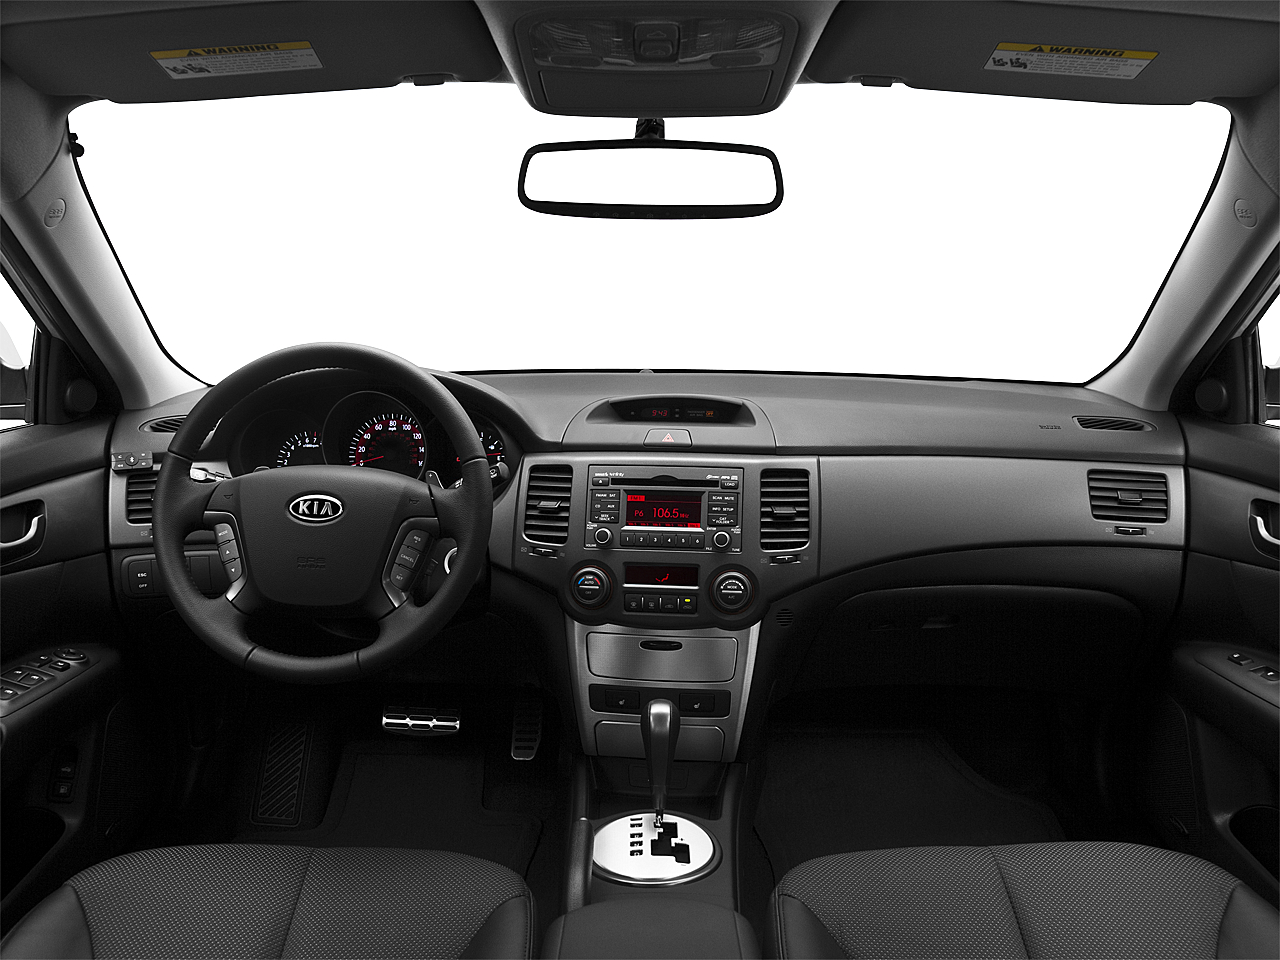 2010 Kia Optima SX 4dr Sedan (V6) - Research - GrooveCar